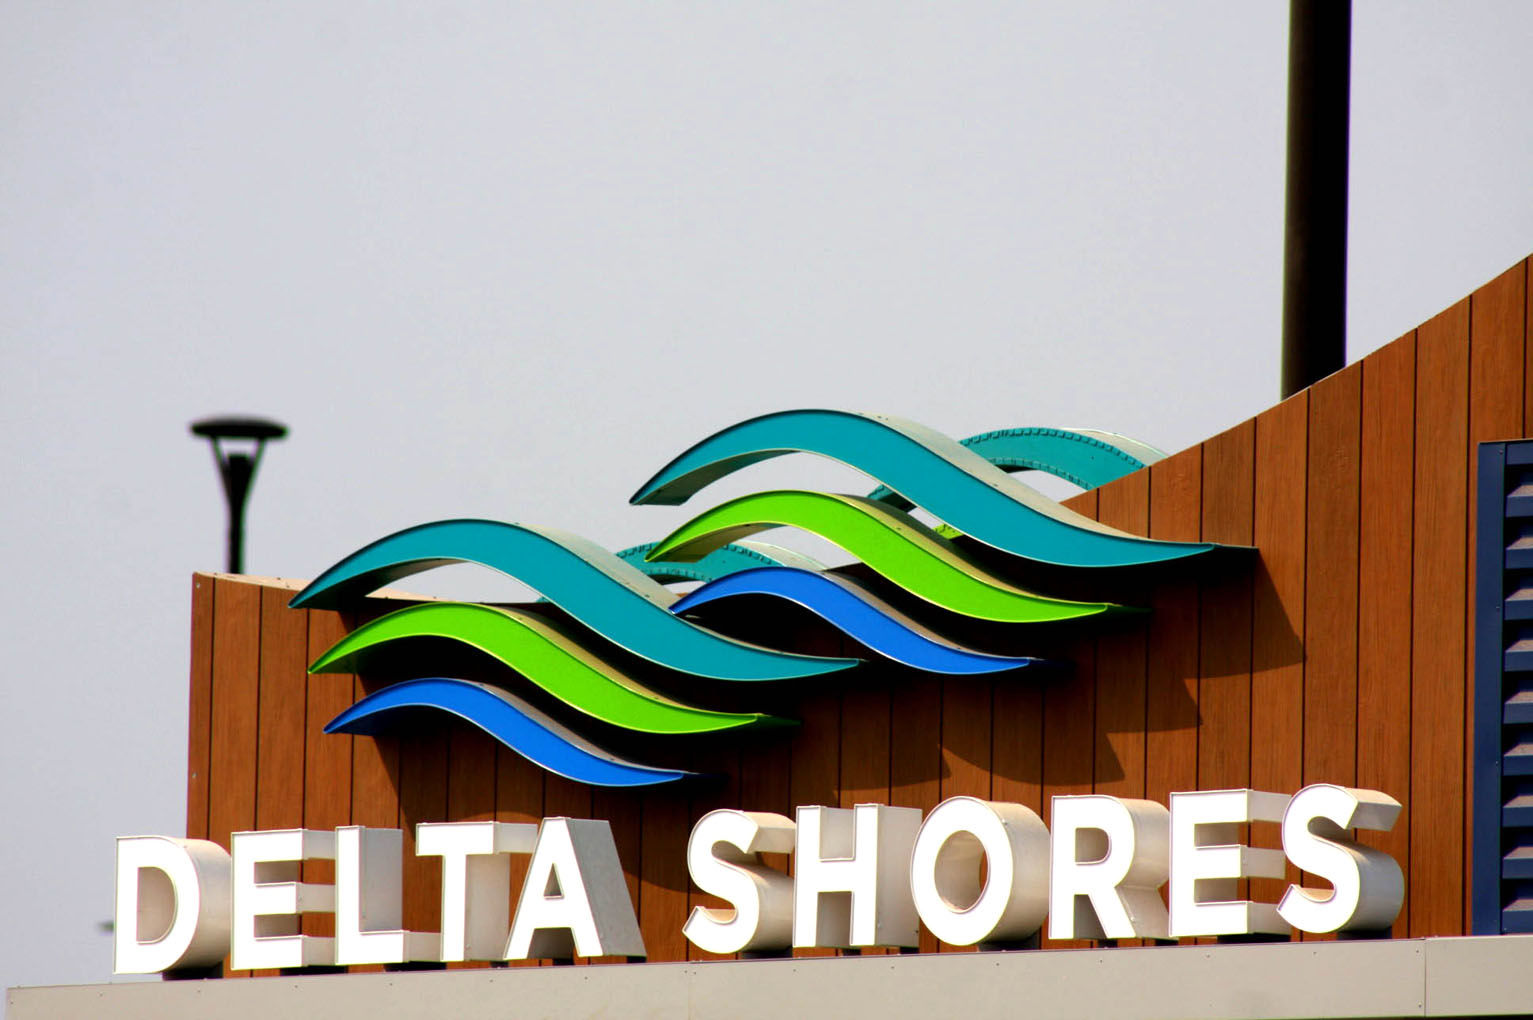 Delta Shores opens outside Elk Grove 